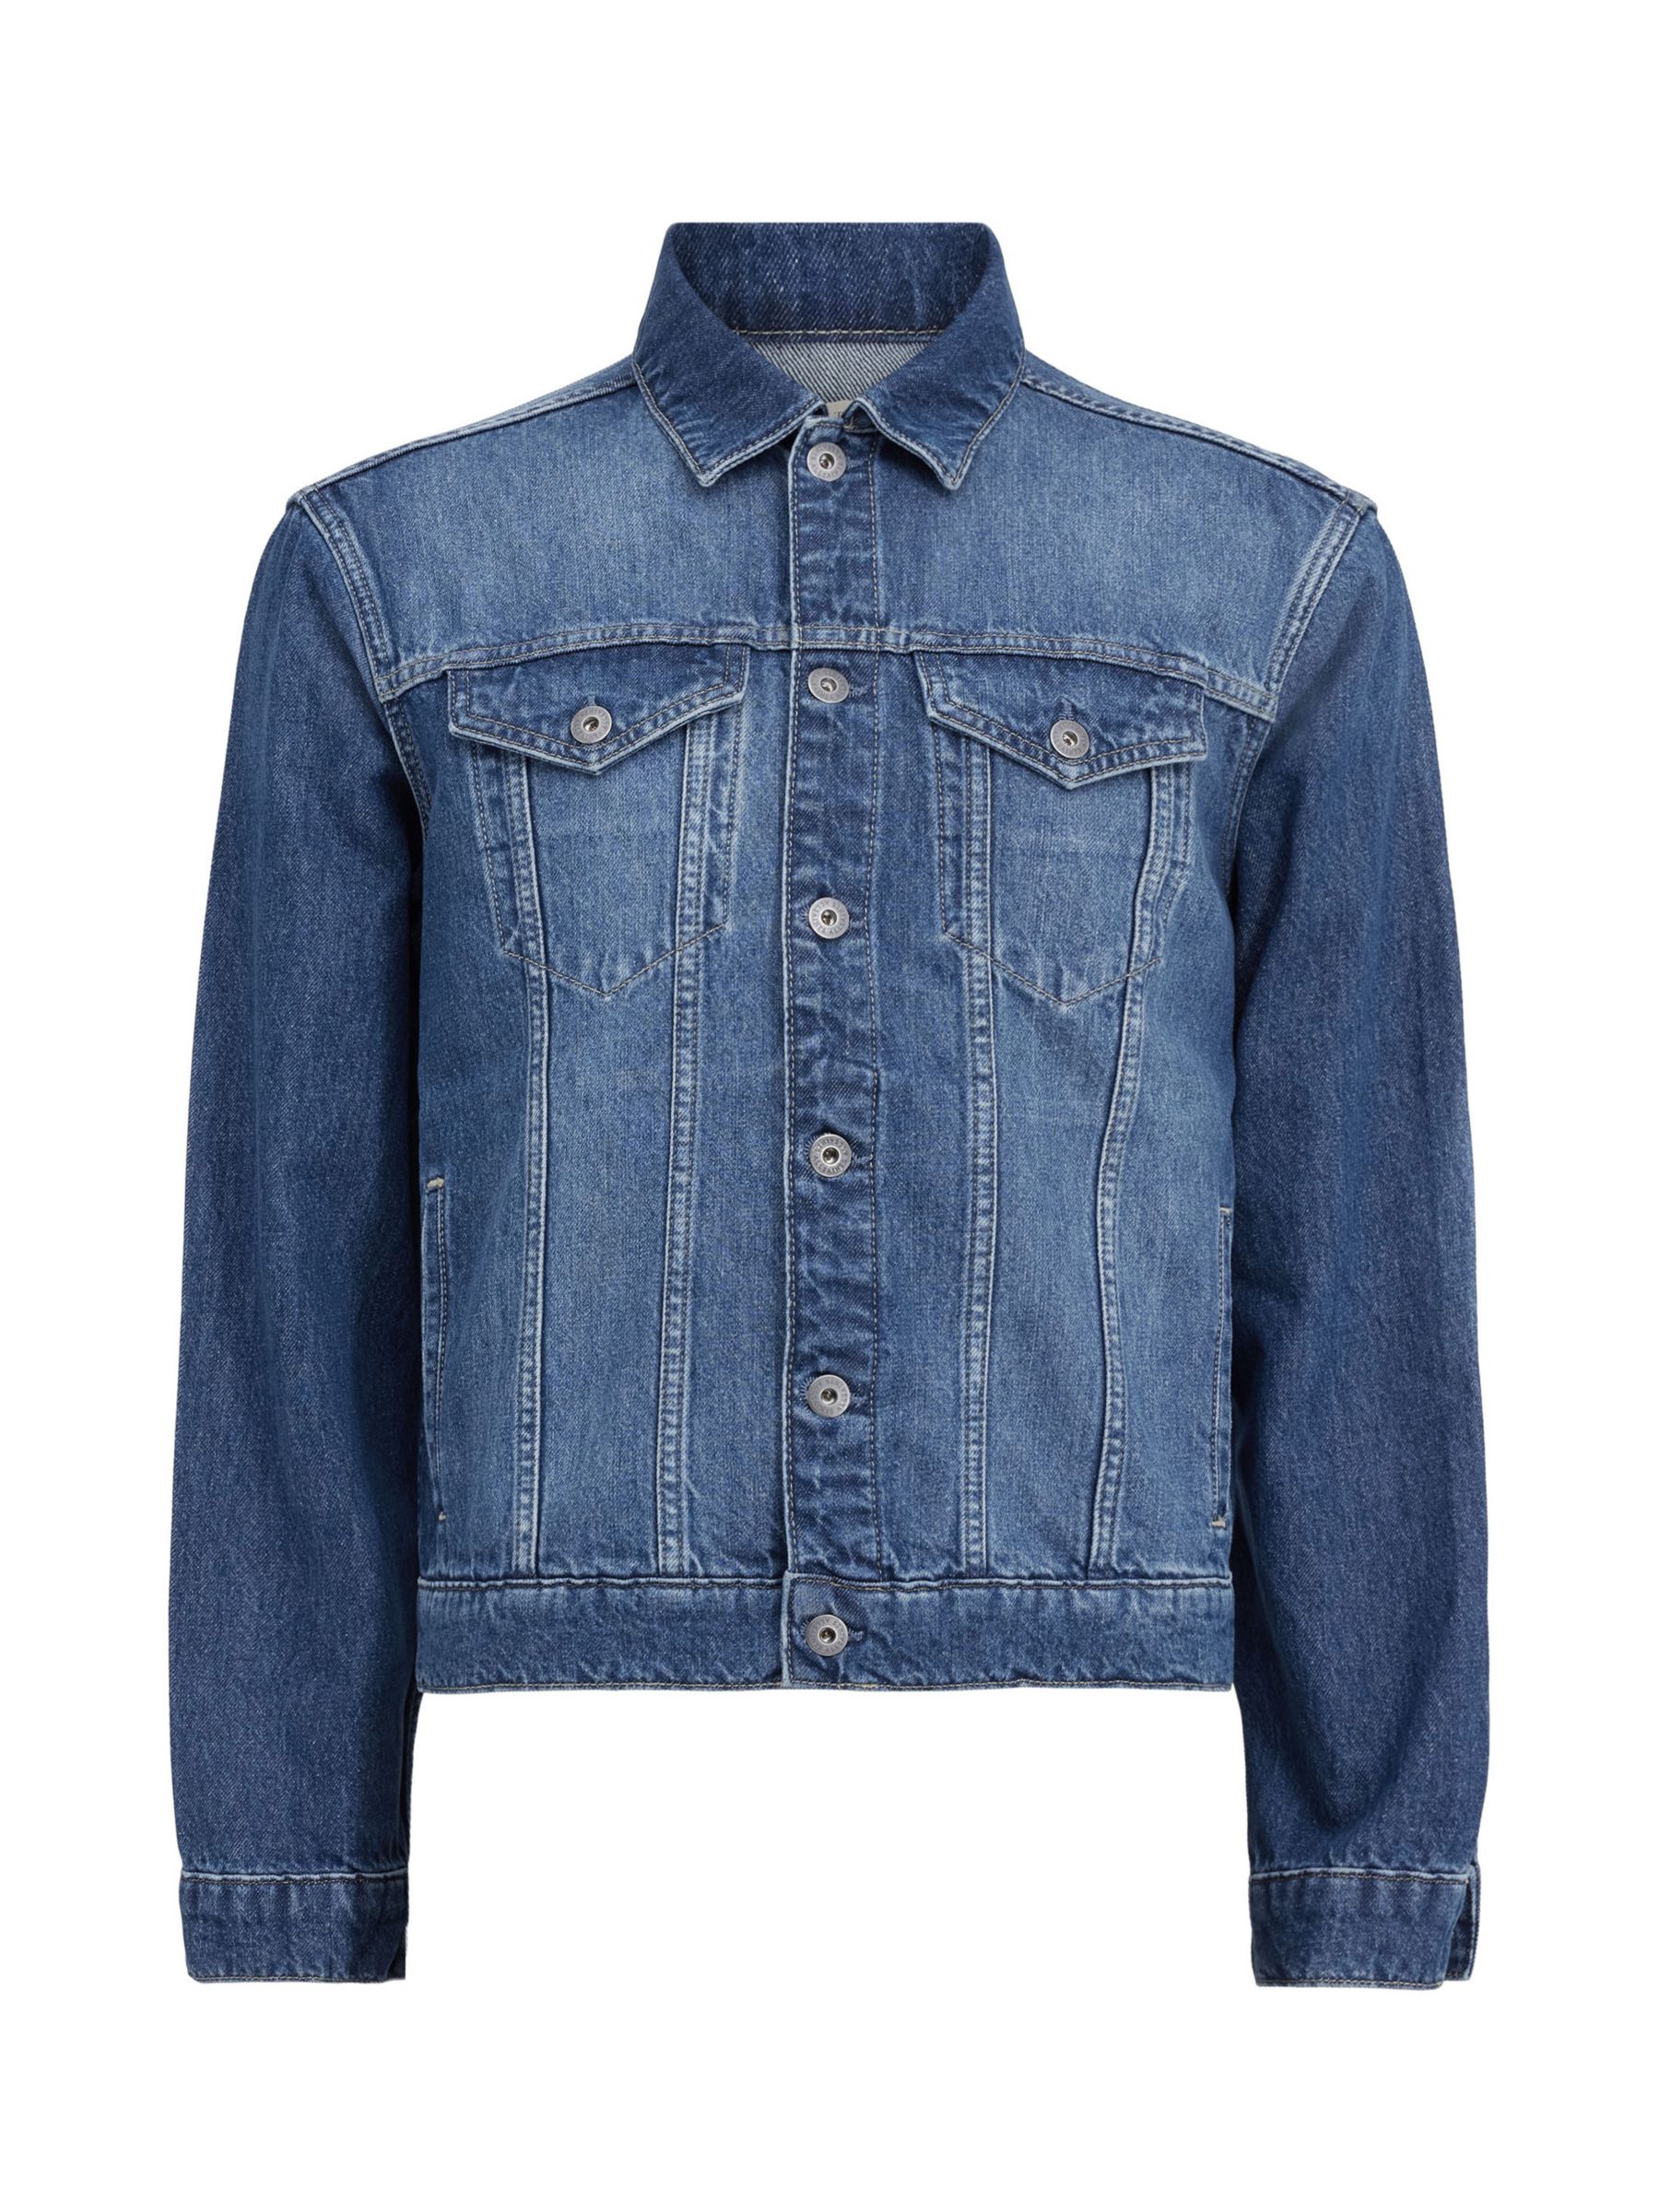 AllSaints Hebden Organic Cotton Denim Jacket, Indigo Blue, L